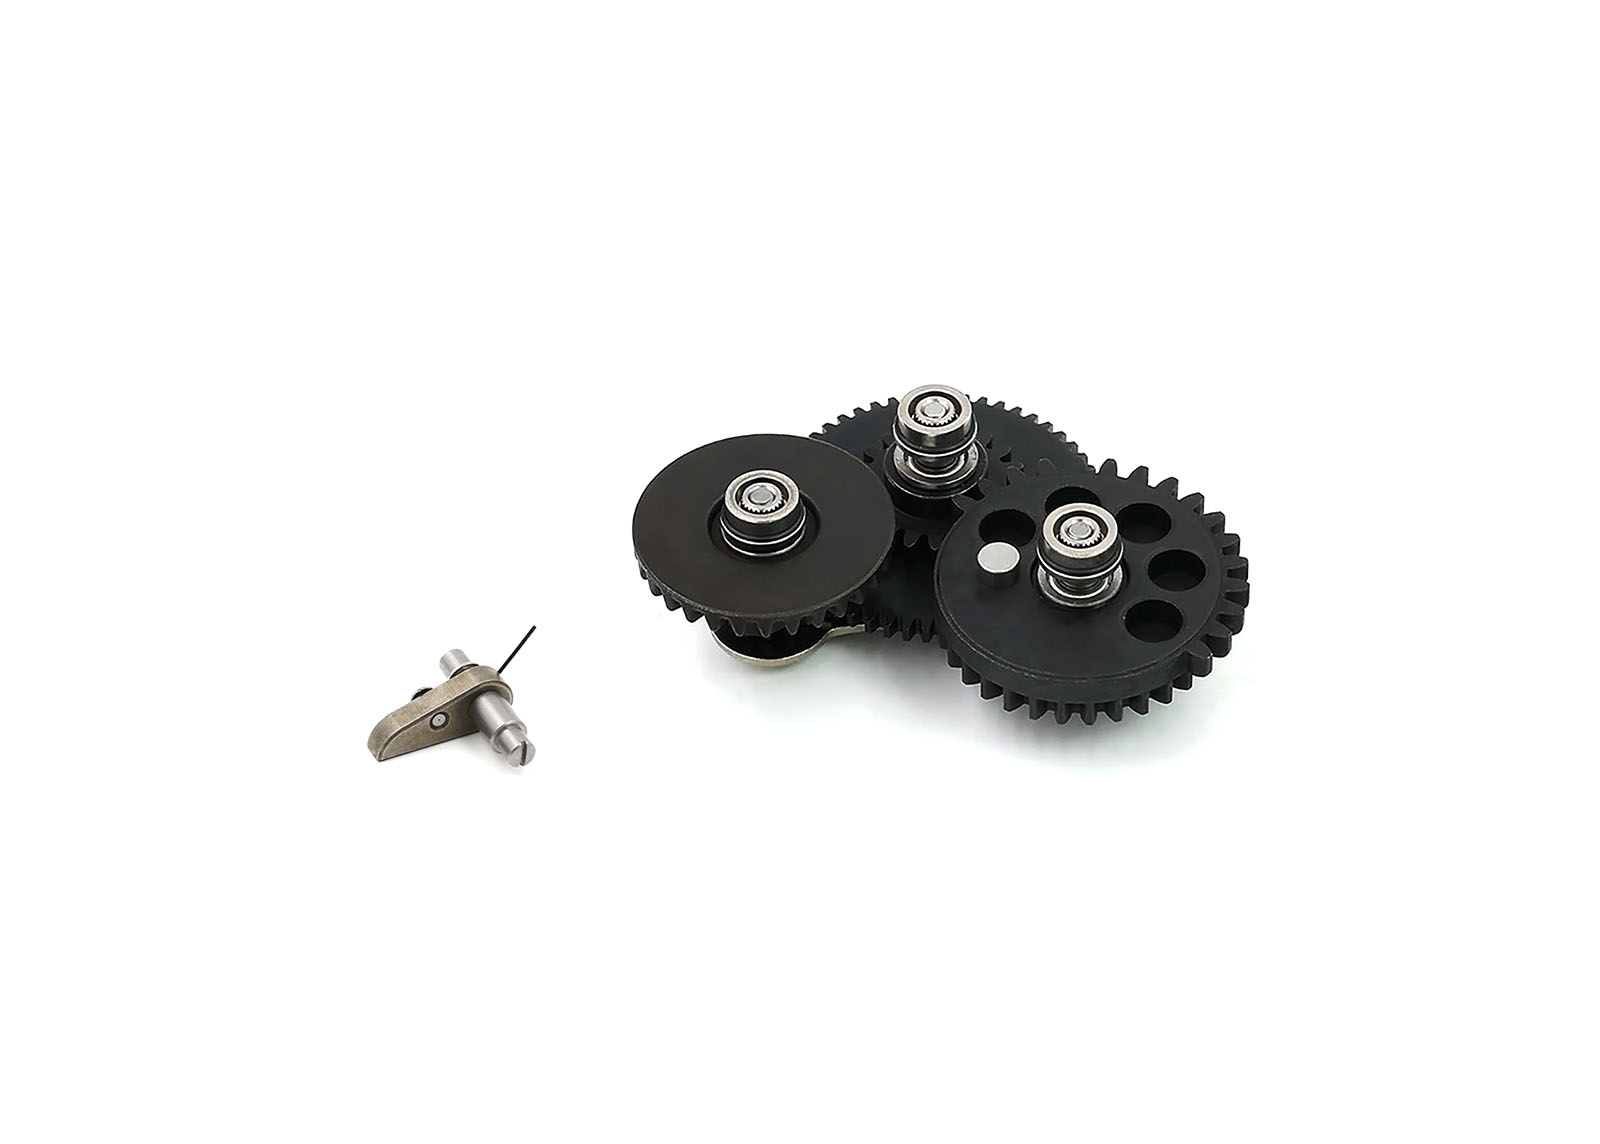 Modular Gear Set - SMOOTH 7mm Ver.2/Ver.3 (NanoTorque 22.2:1) - Modify Airsoft parts